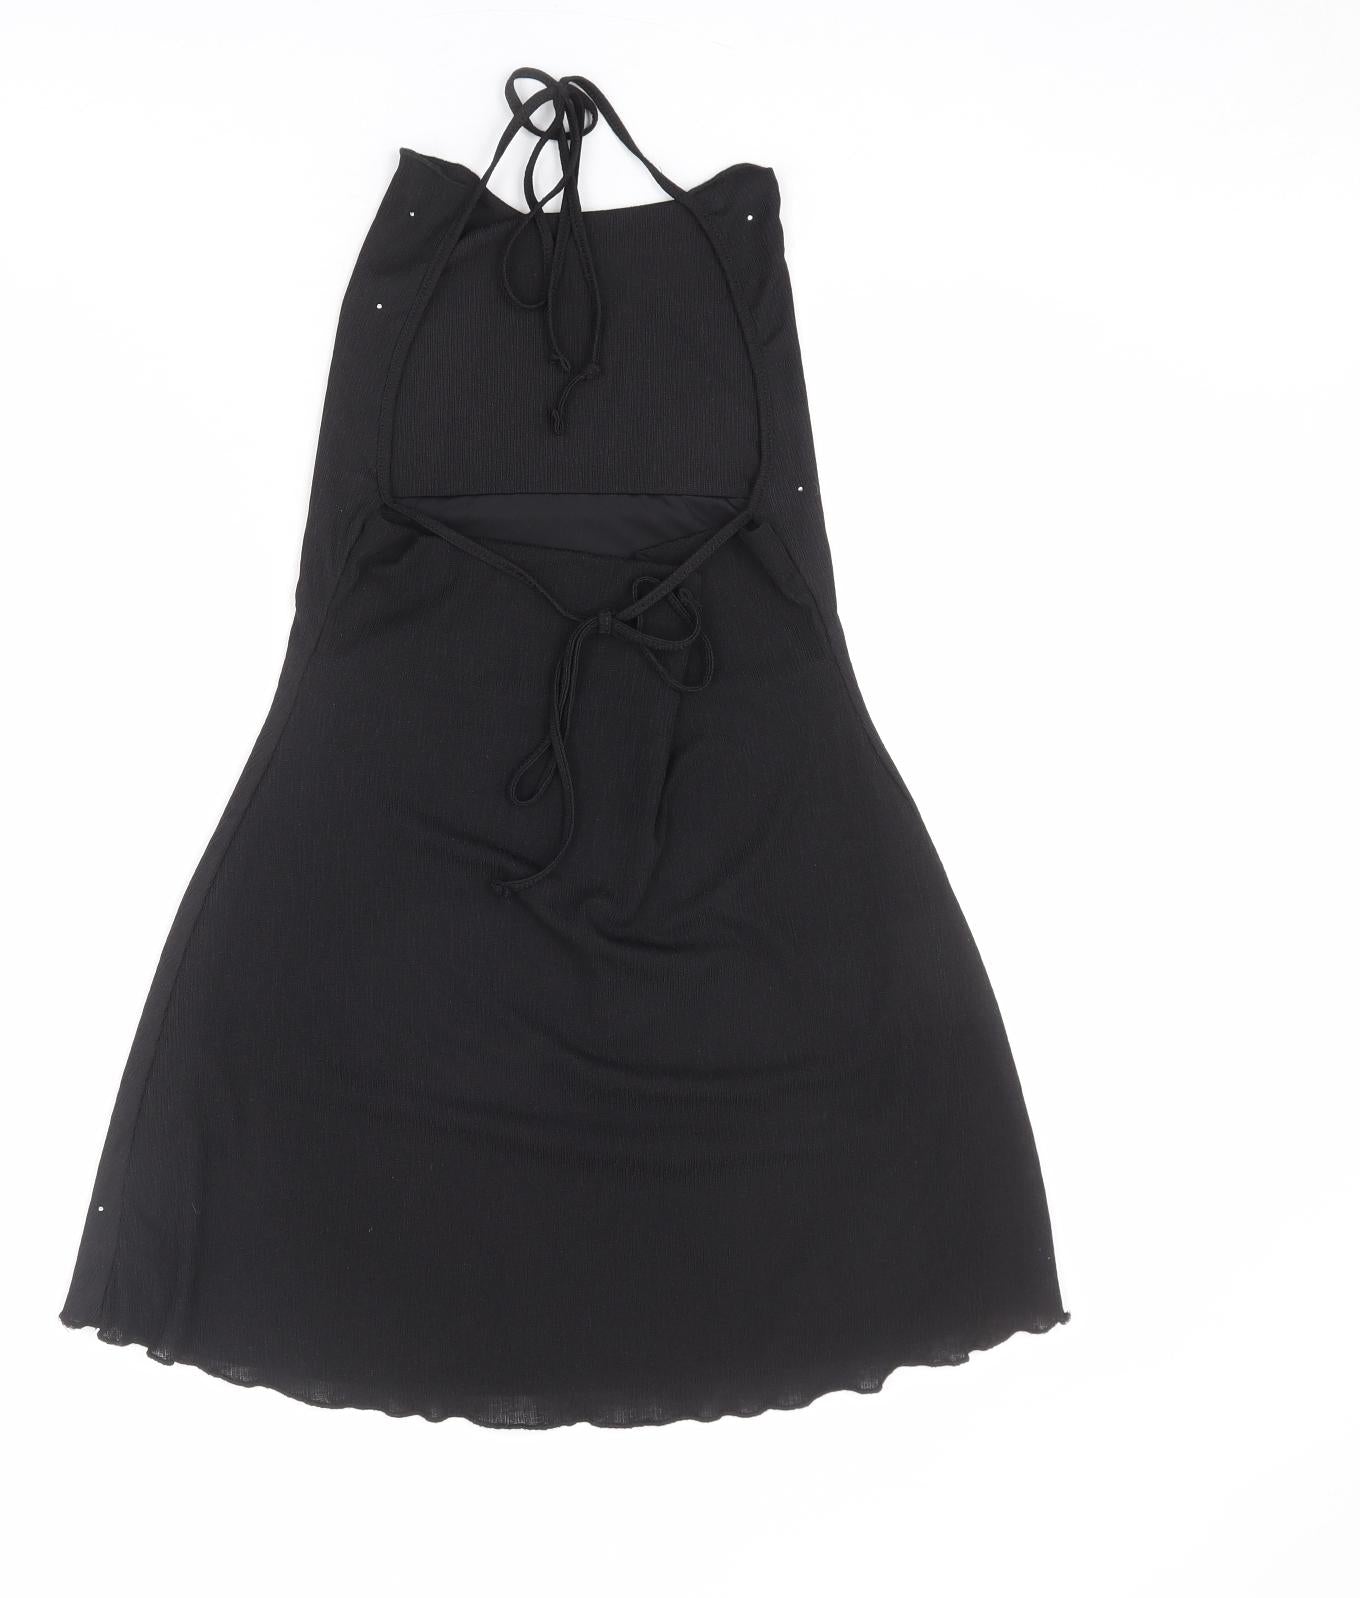 Bershka Womens Black Polyester Slip Dress Size M Cowl Neck Tie